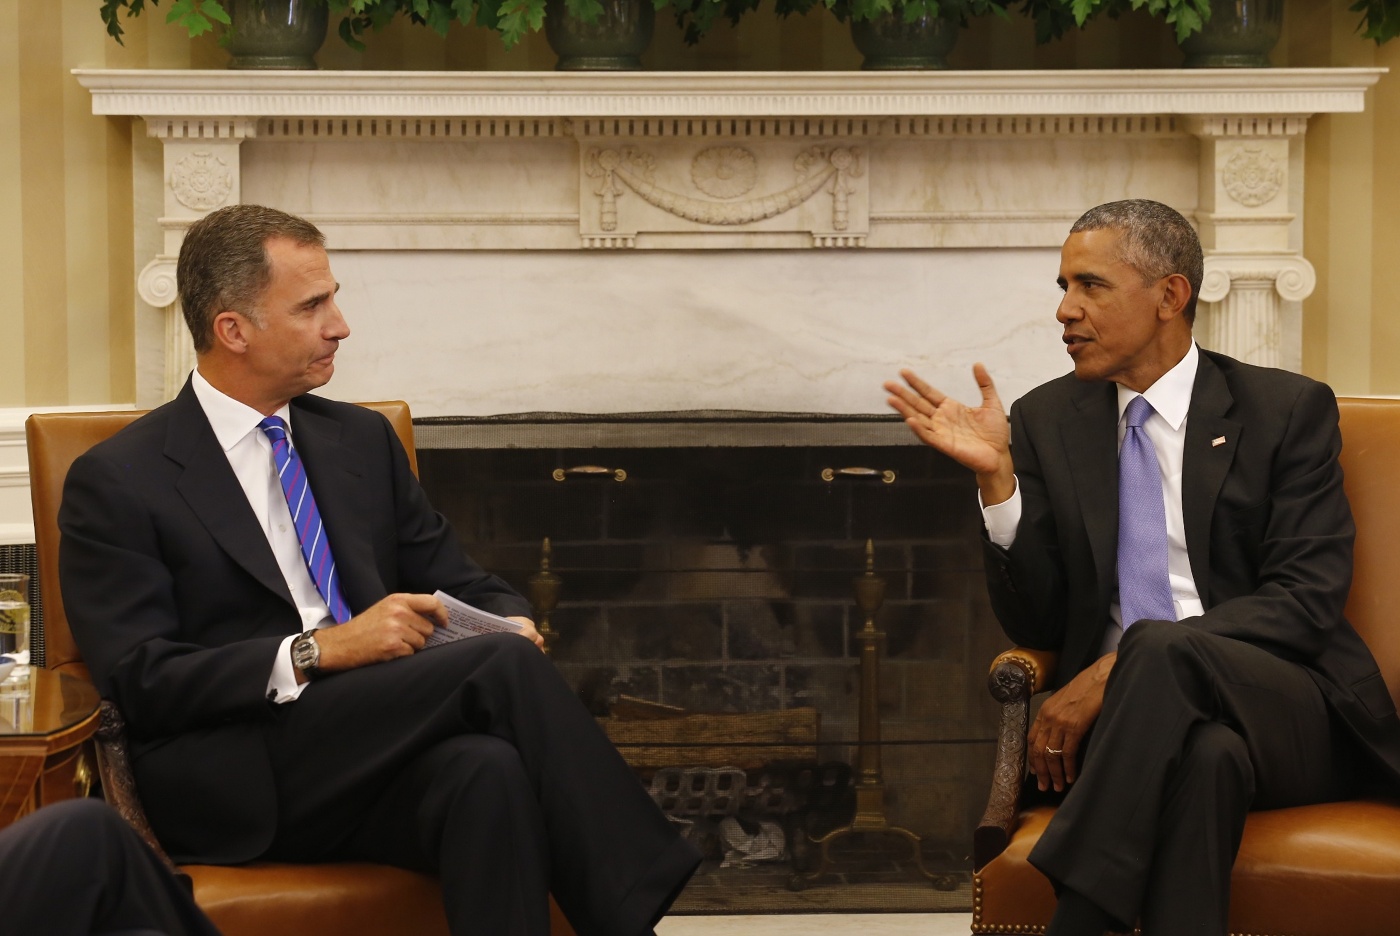 US President Barack Obama and Spanish King Felipe VI at the White House (by ACN)